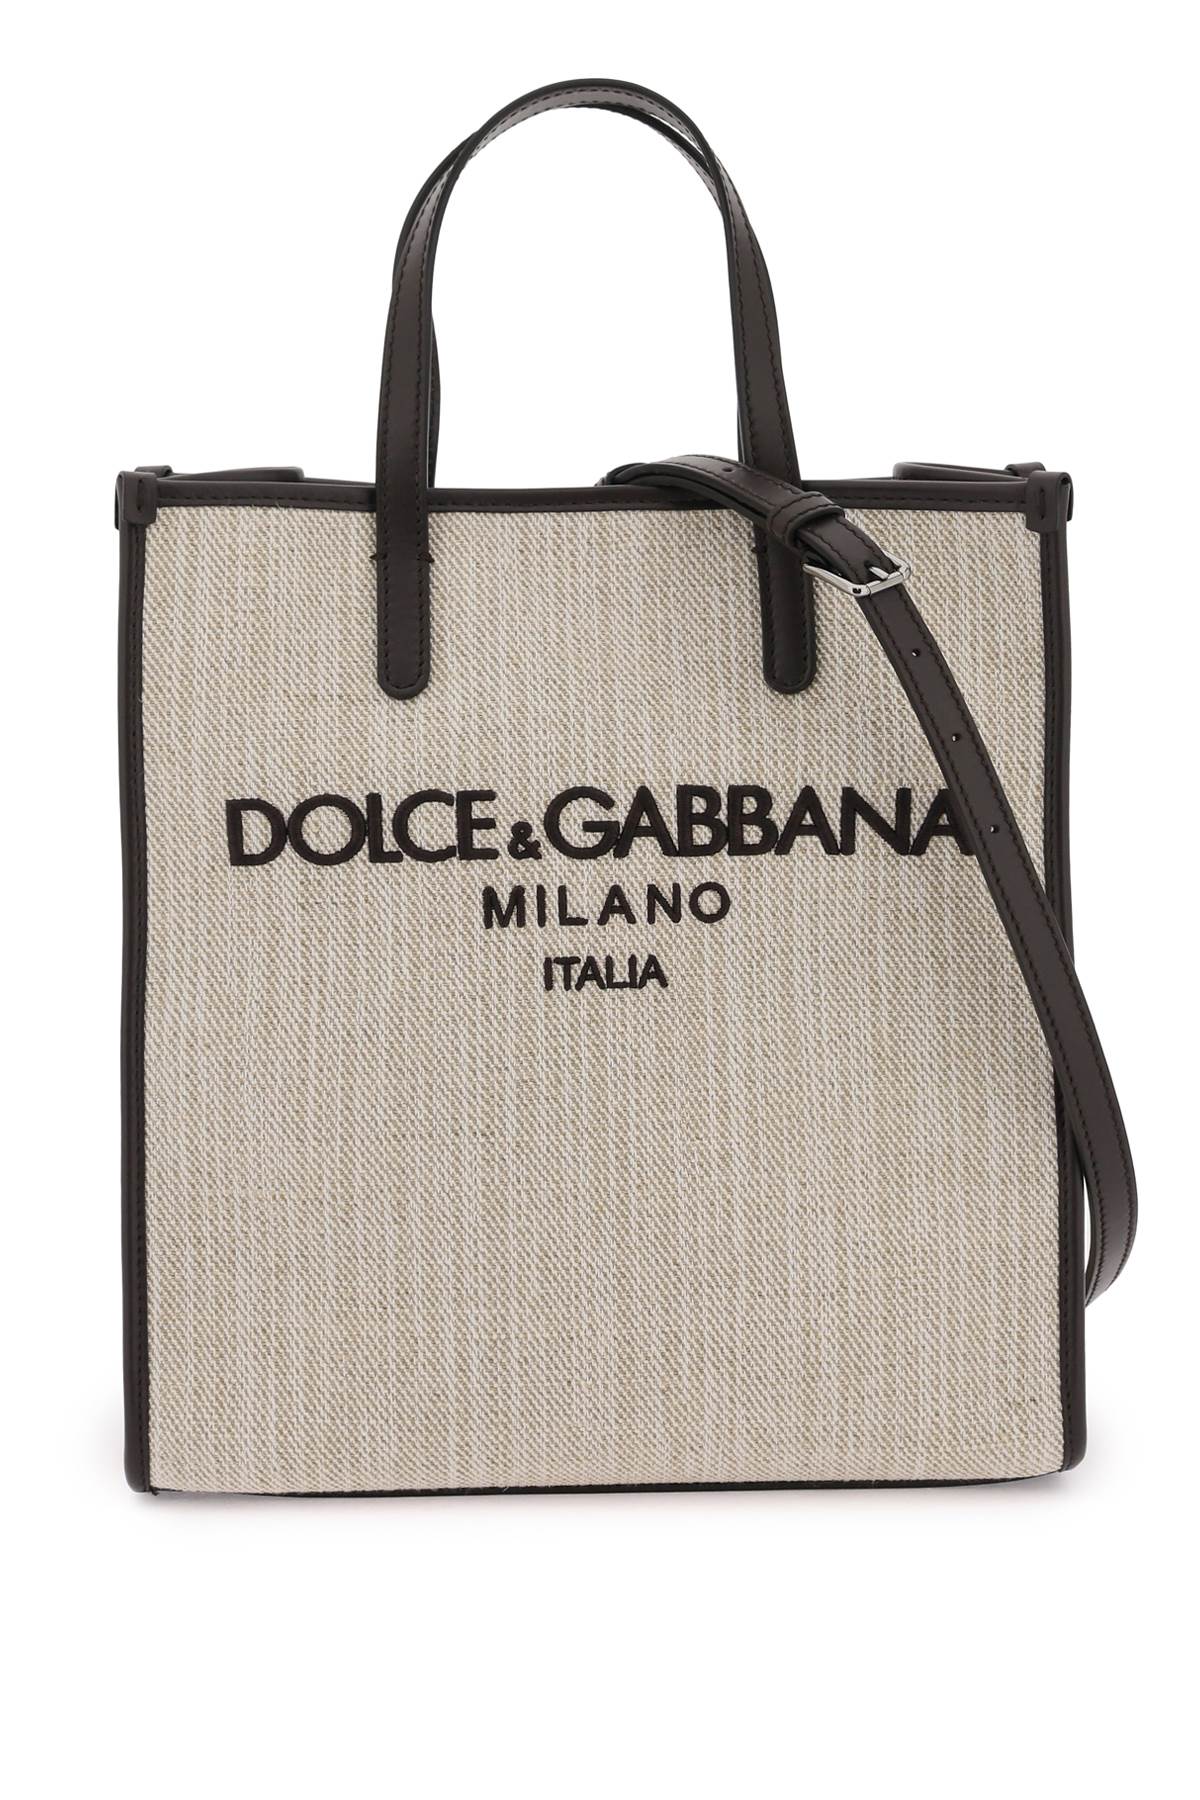 Dolce & Gabbana Textured Canvas Tote Bag